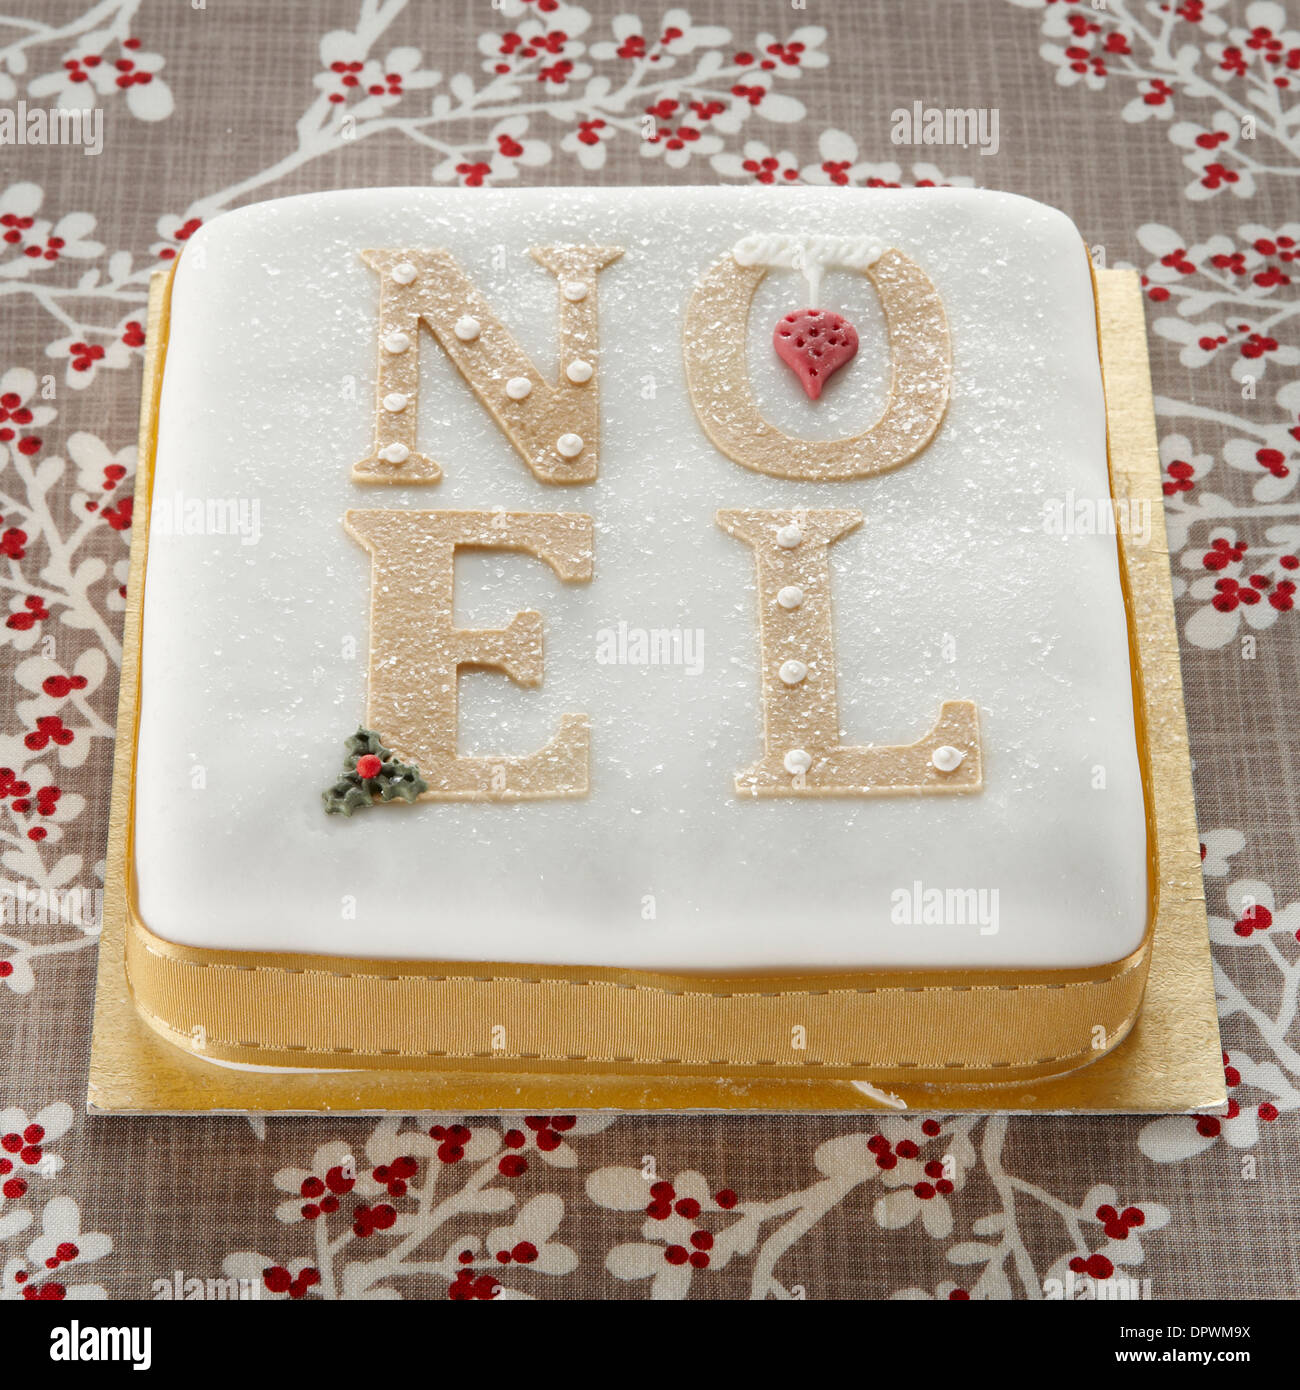 Noel cake Stock Photo